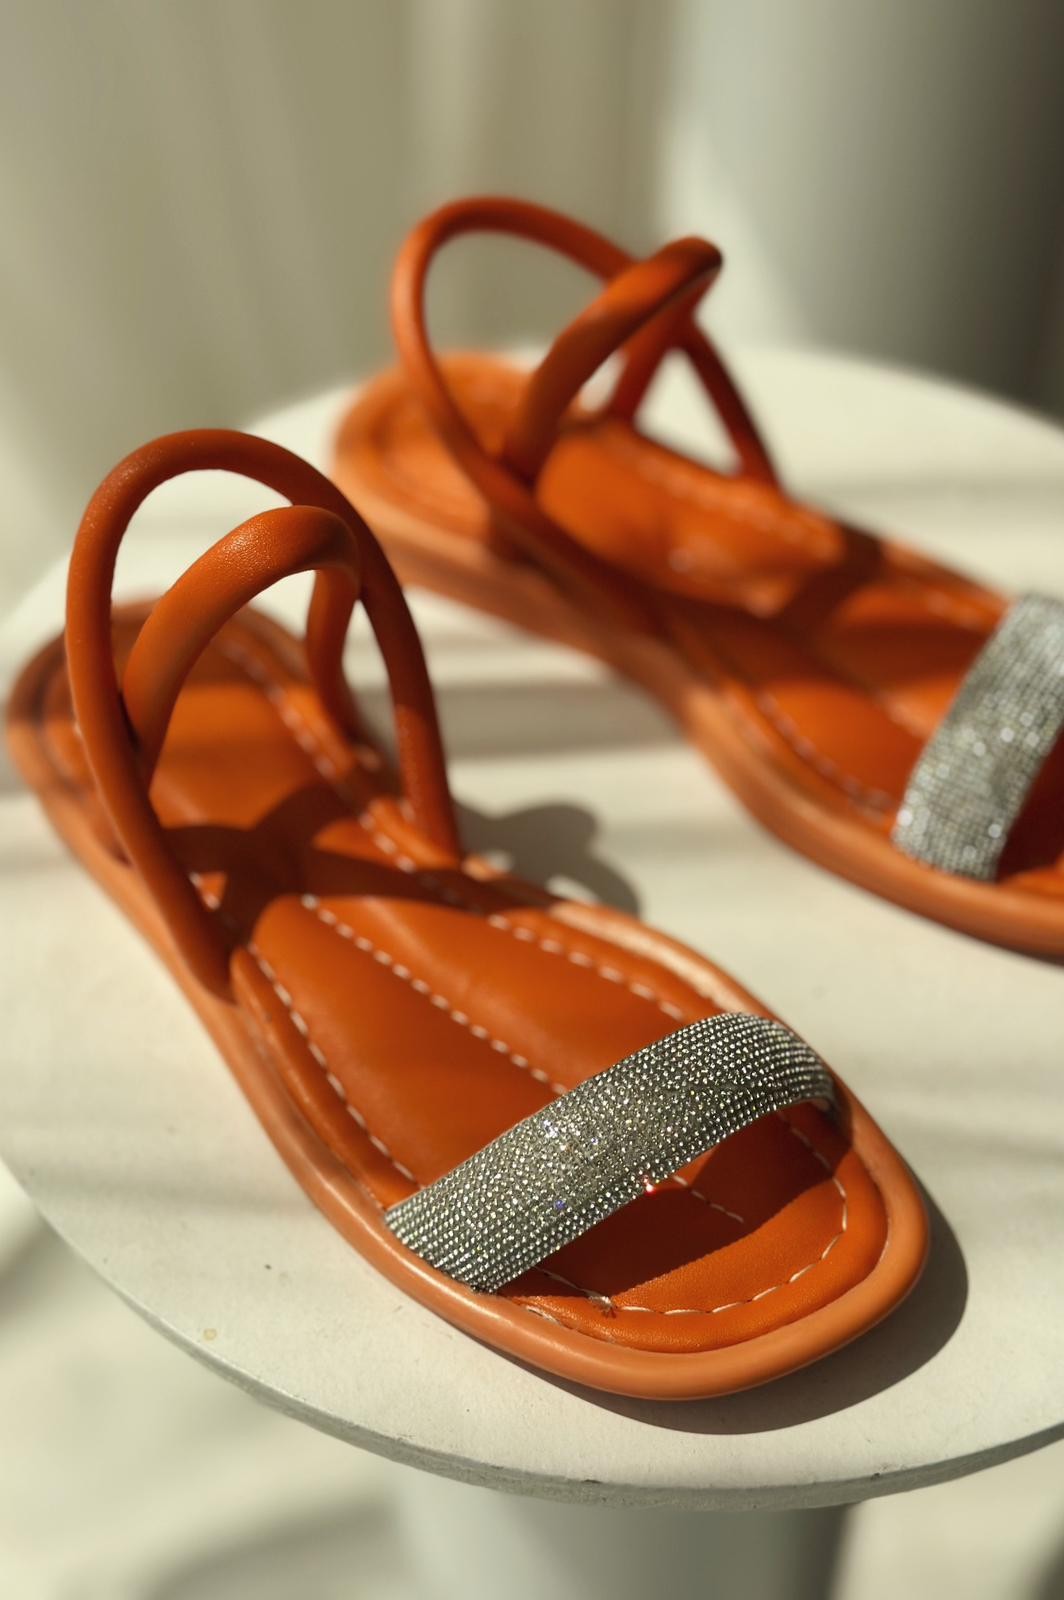 Valinta matte leather woman sandals orange